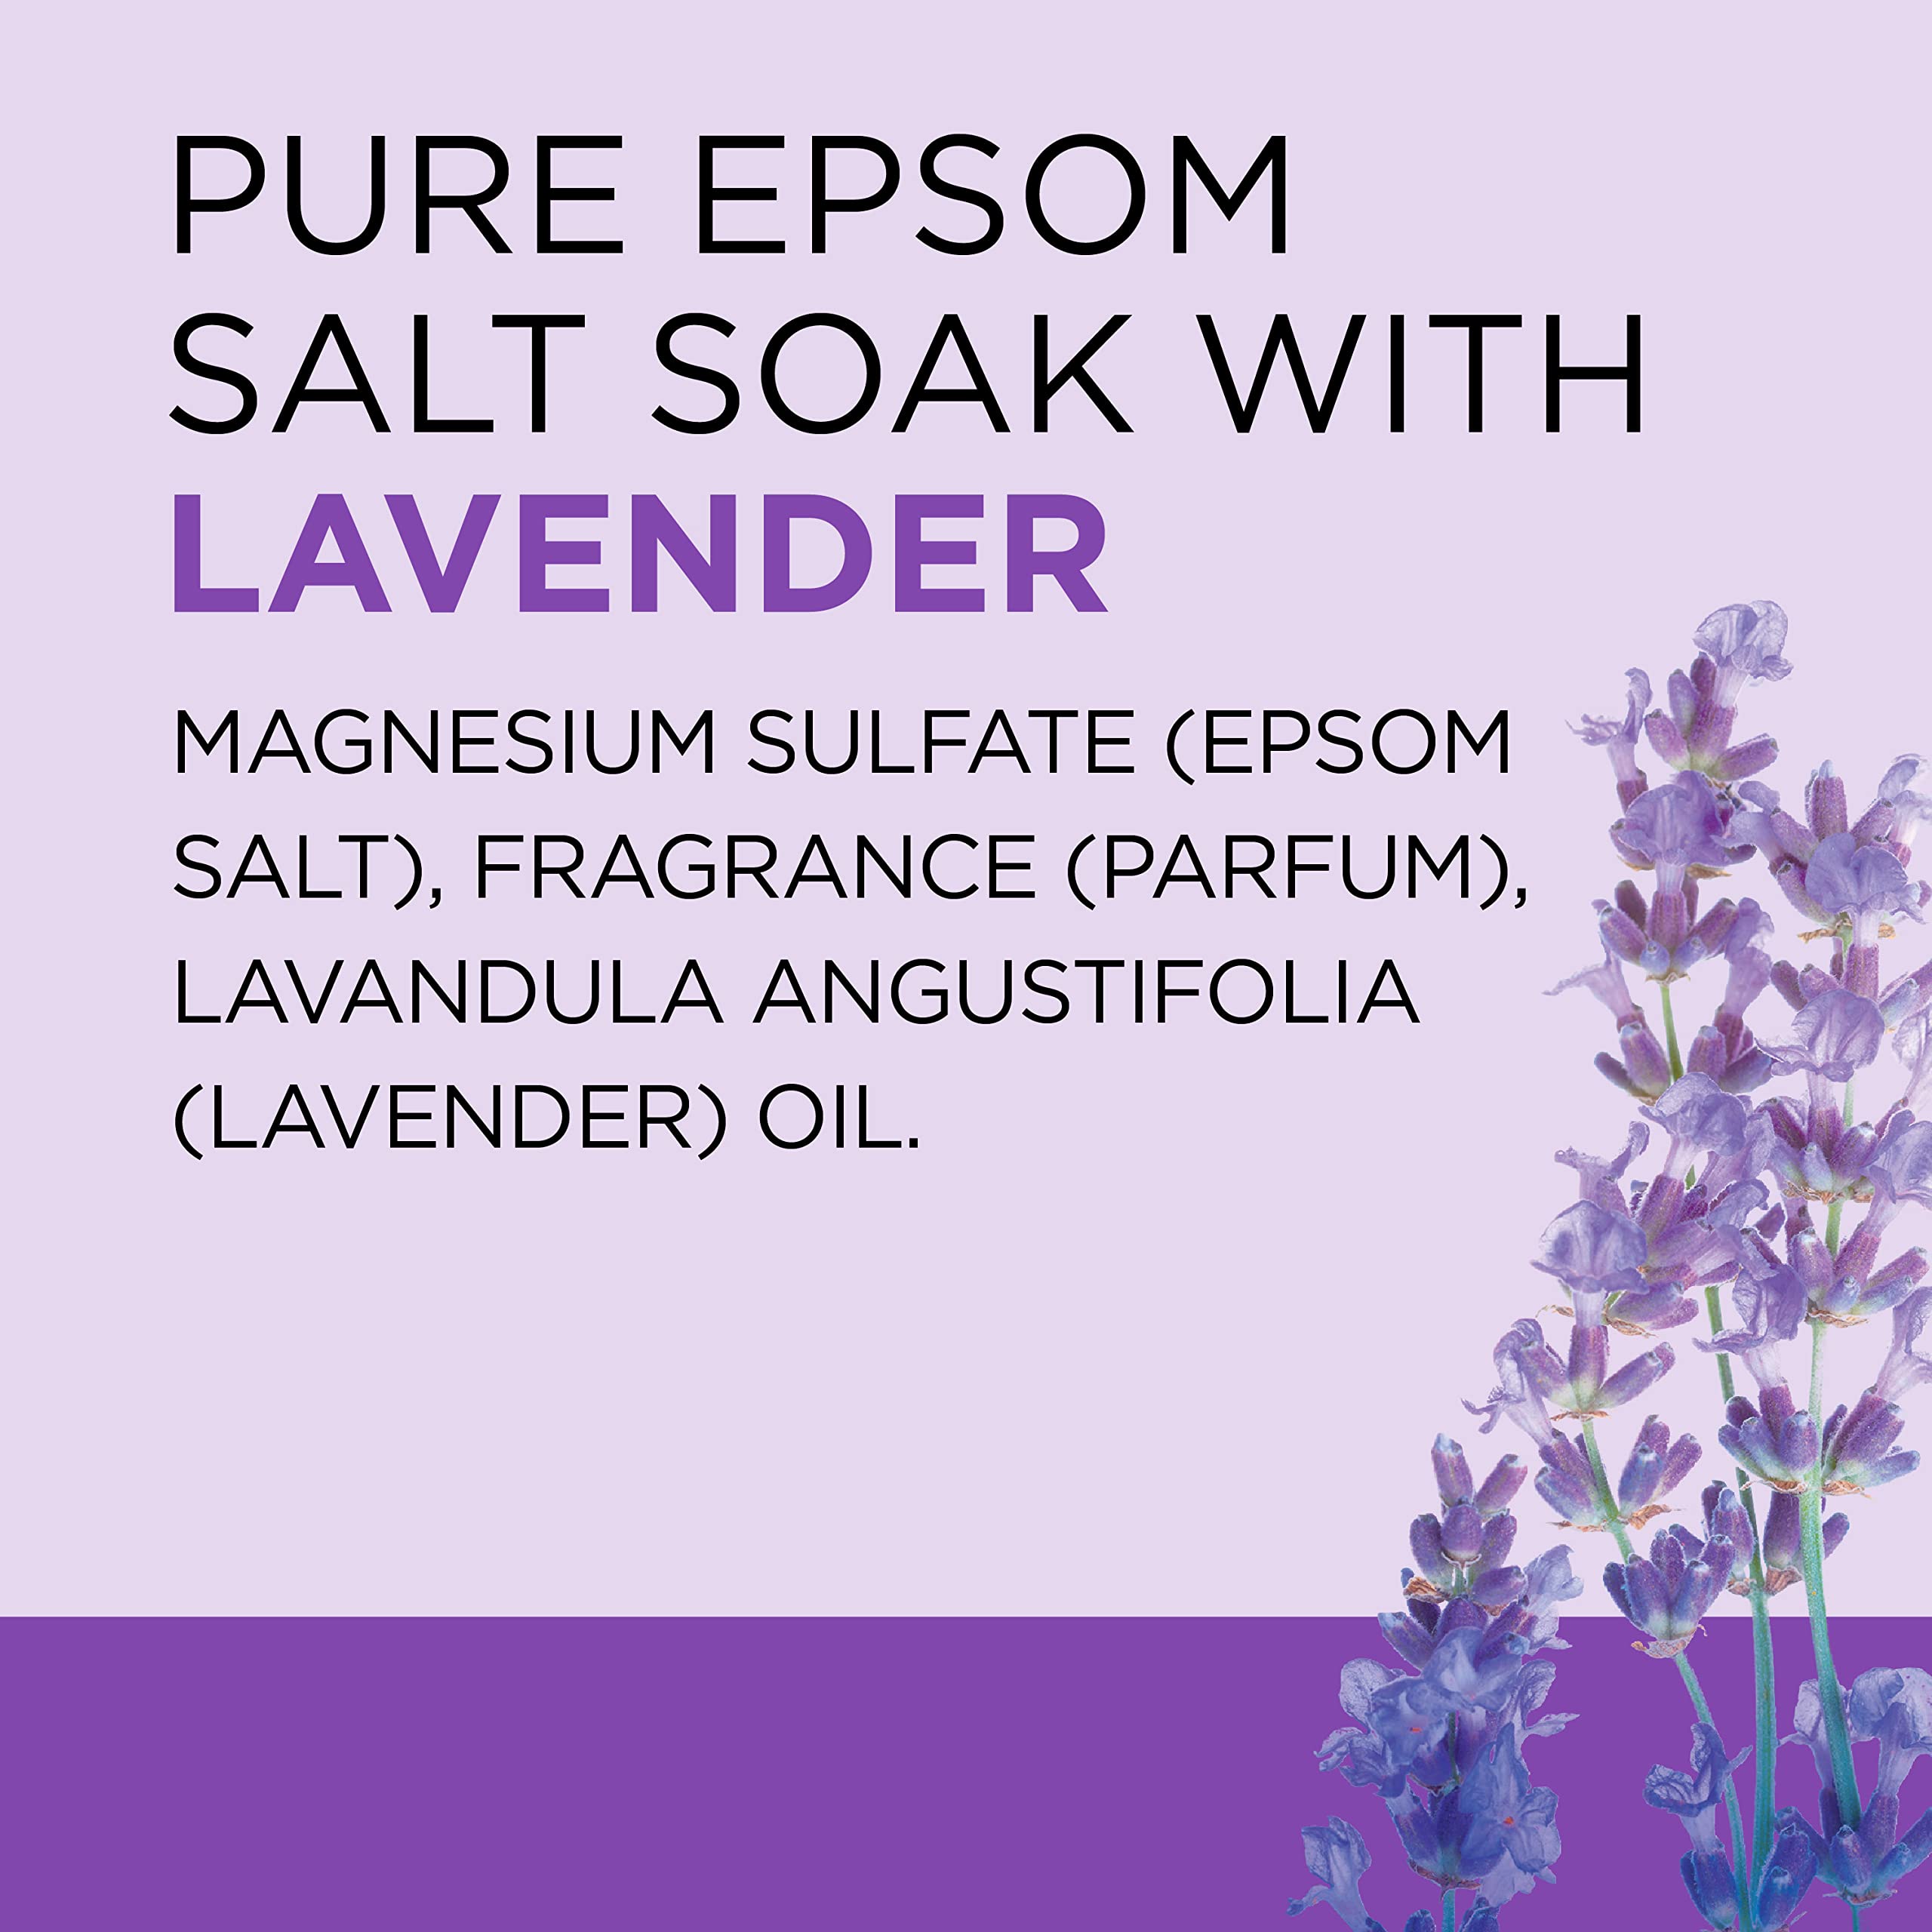 Dr Teal's Epsom Salt Soaking Solution, Soothe & Sleep, Lavender, 3lbs (Packaging May Vary)